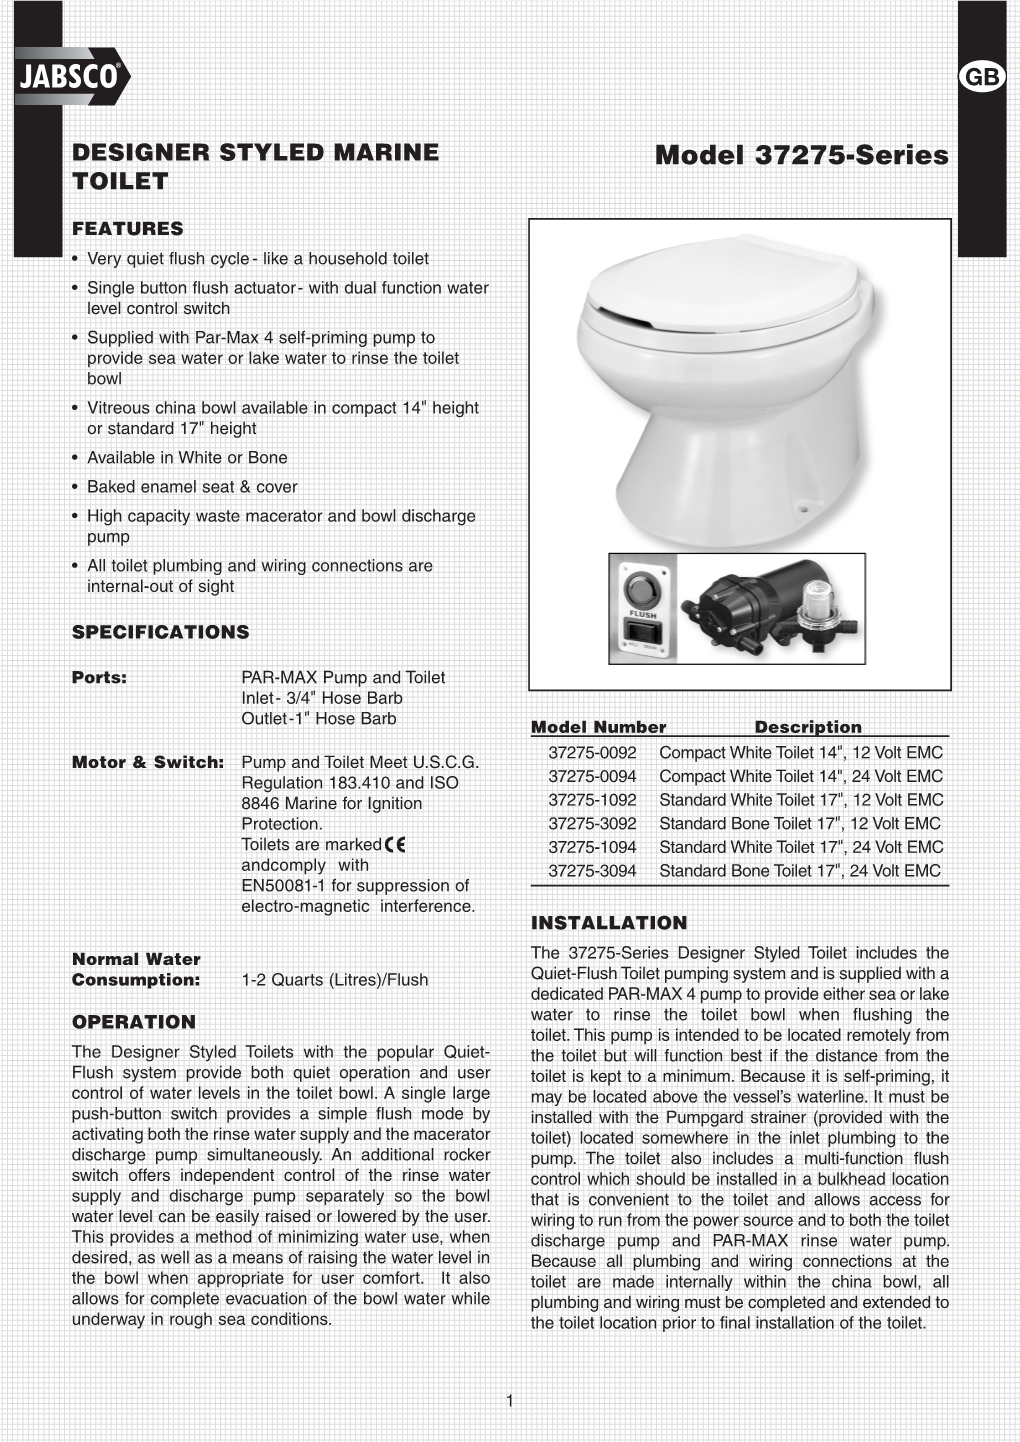 Model 37275-Series Toilet